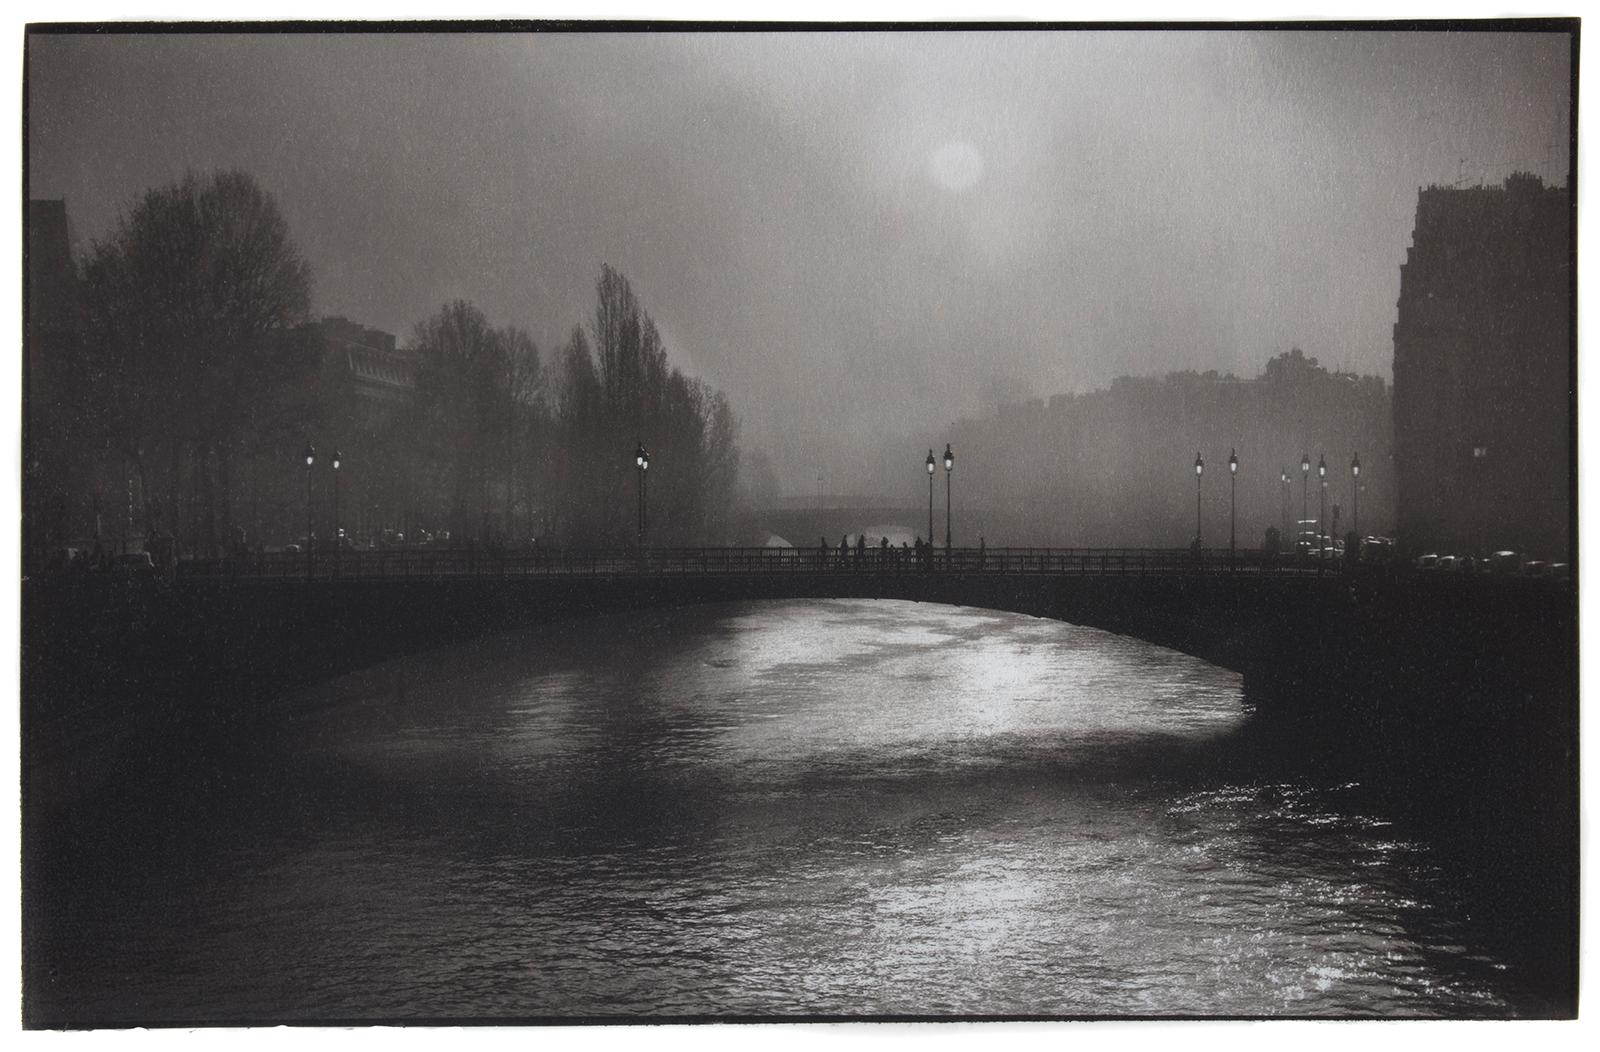 Ian Sanderson Black and White Photograph – Pont d'Arcole - Platinum Palladium print on vellum over silver, limited edition